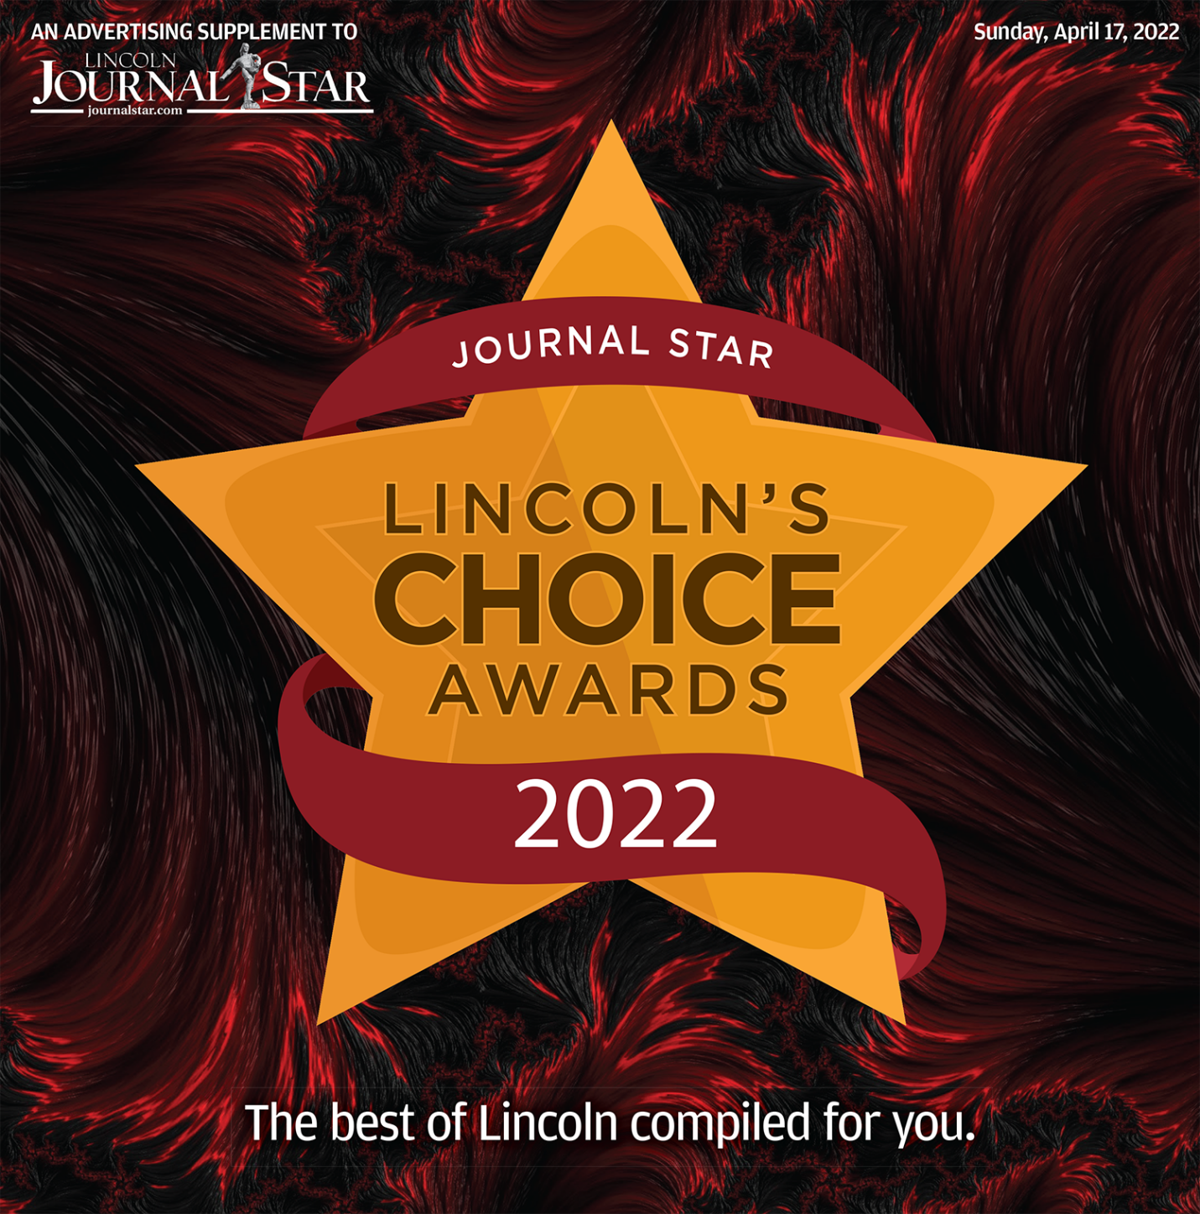 Lincoln's Choice Awards 2022